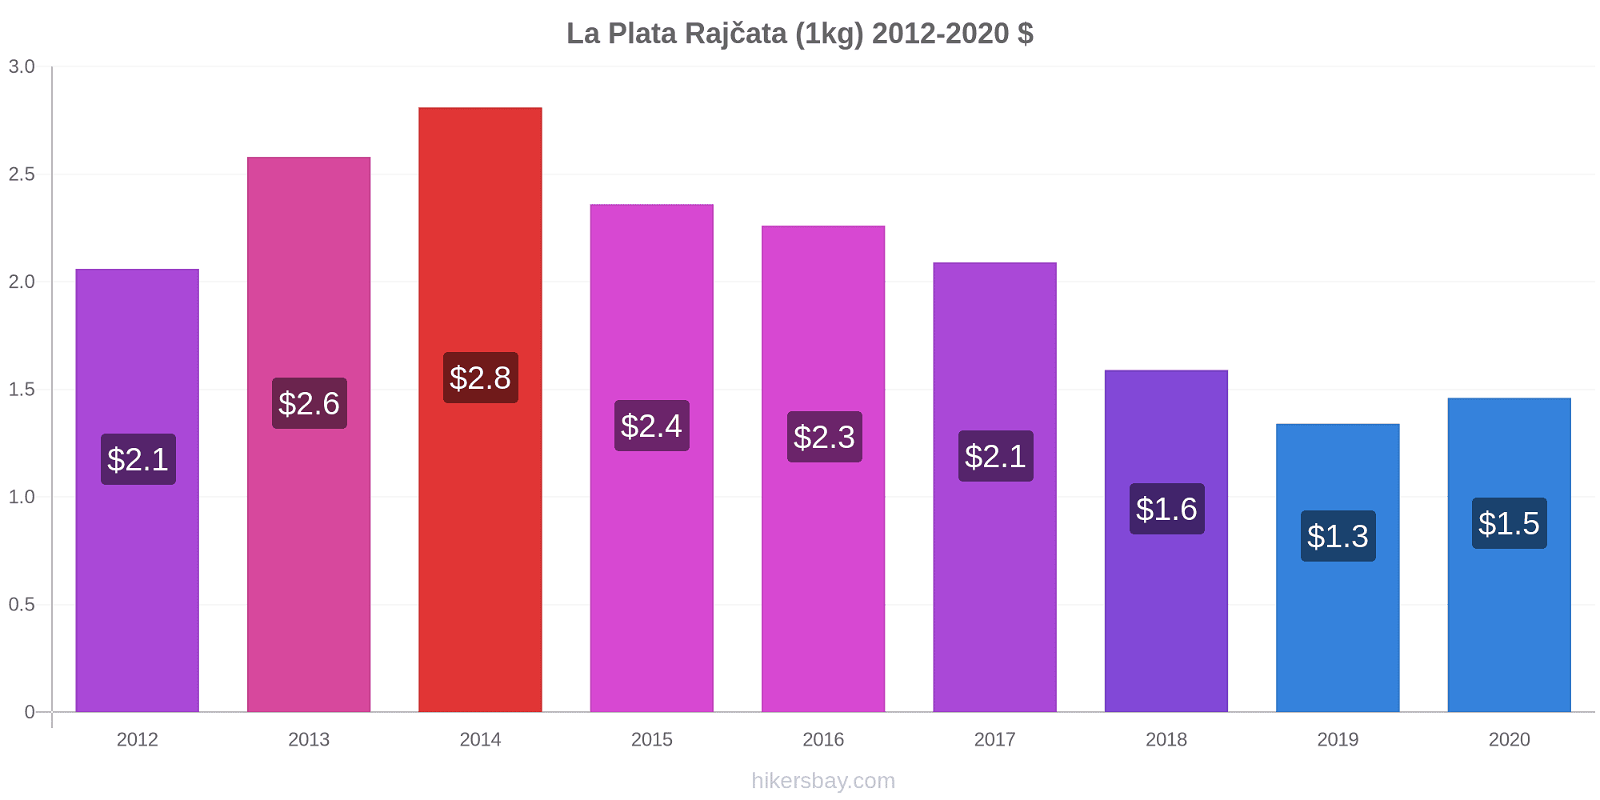 La Plata změny cen Rajčata (1kg) hikersbay.com